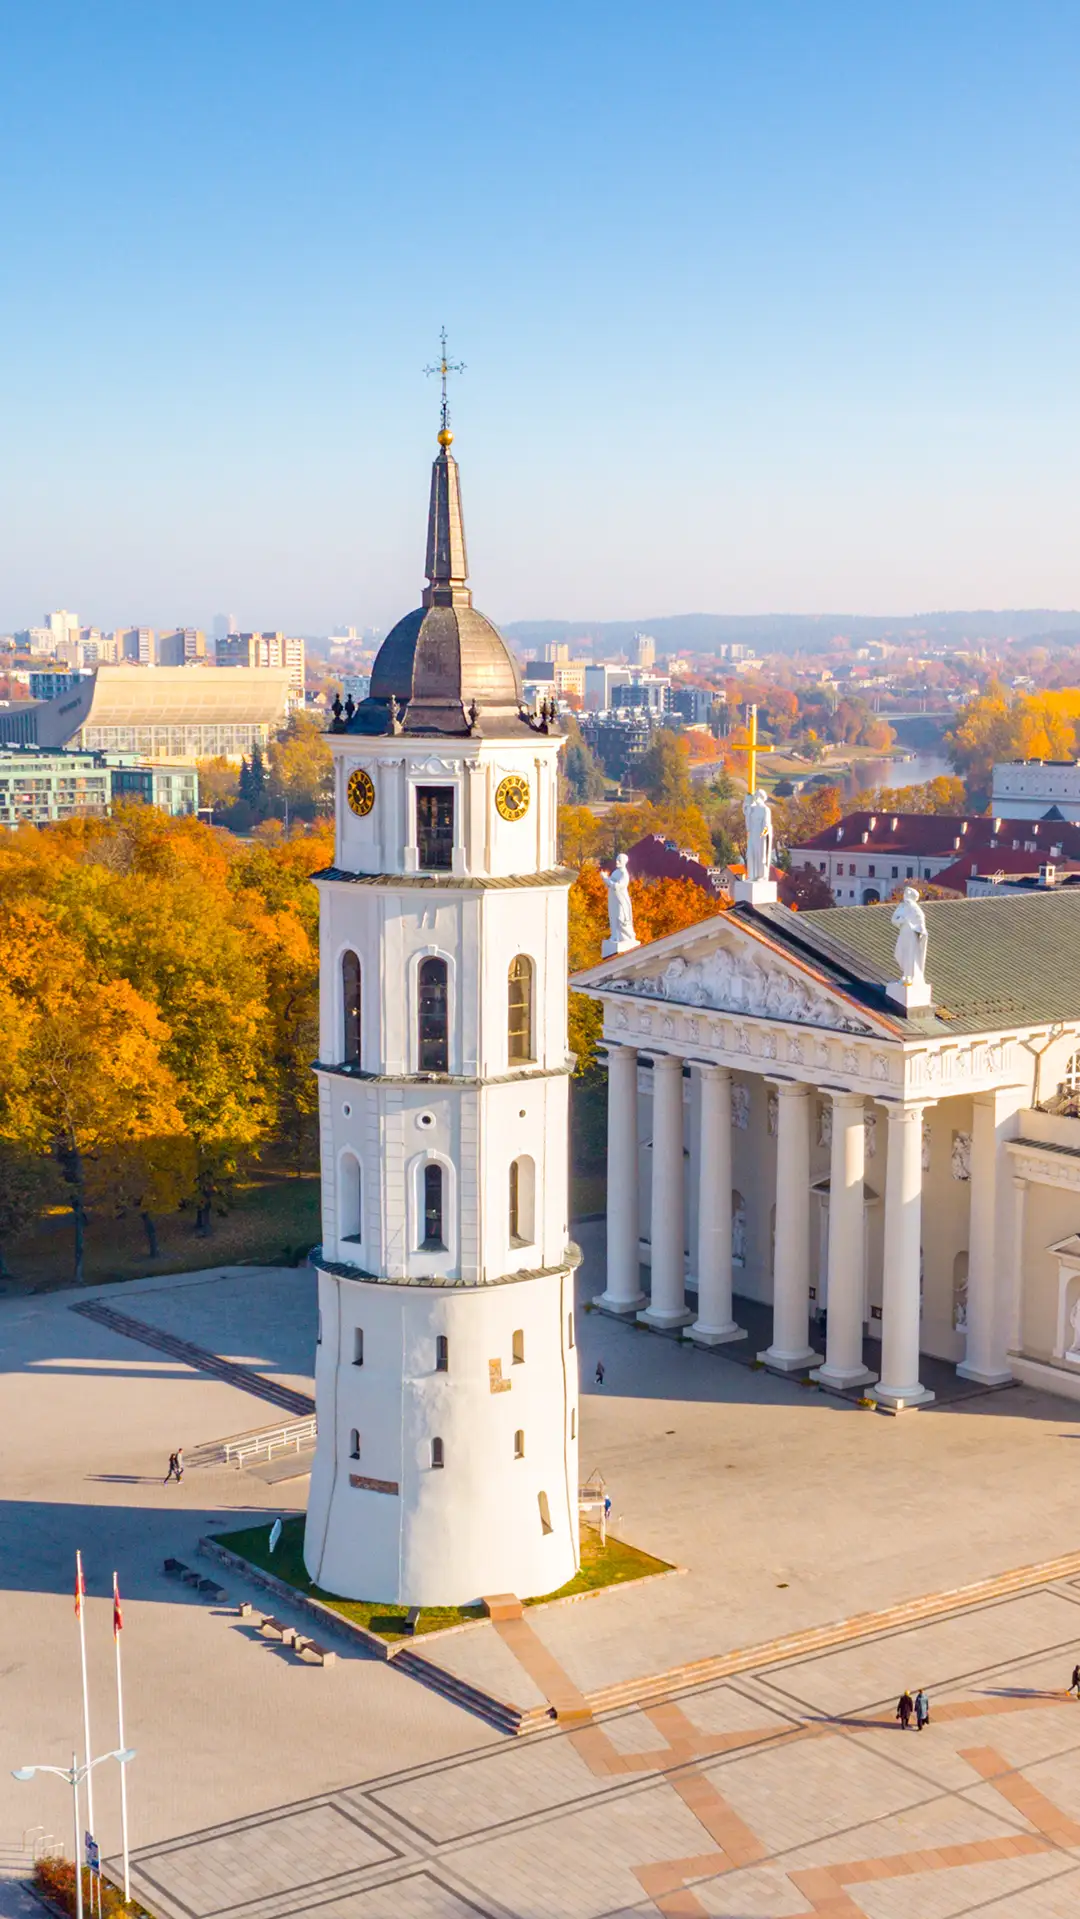 Aerial view of Vilnius, Lithuania.